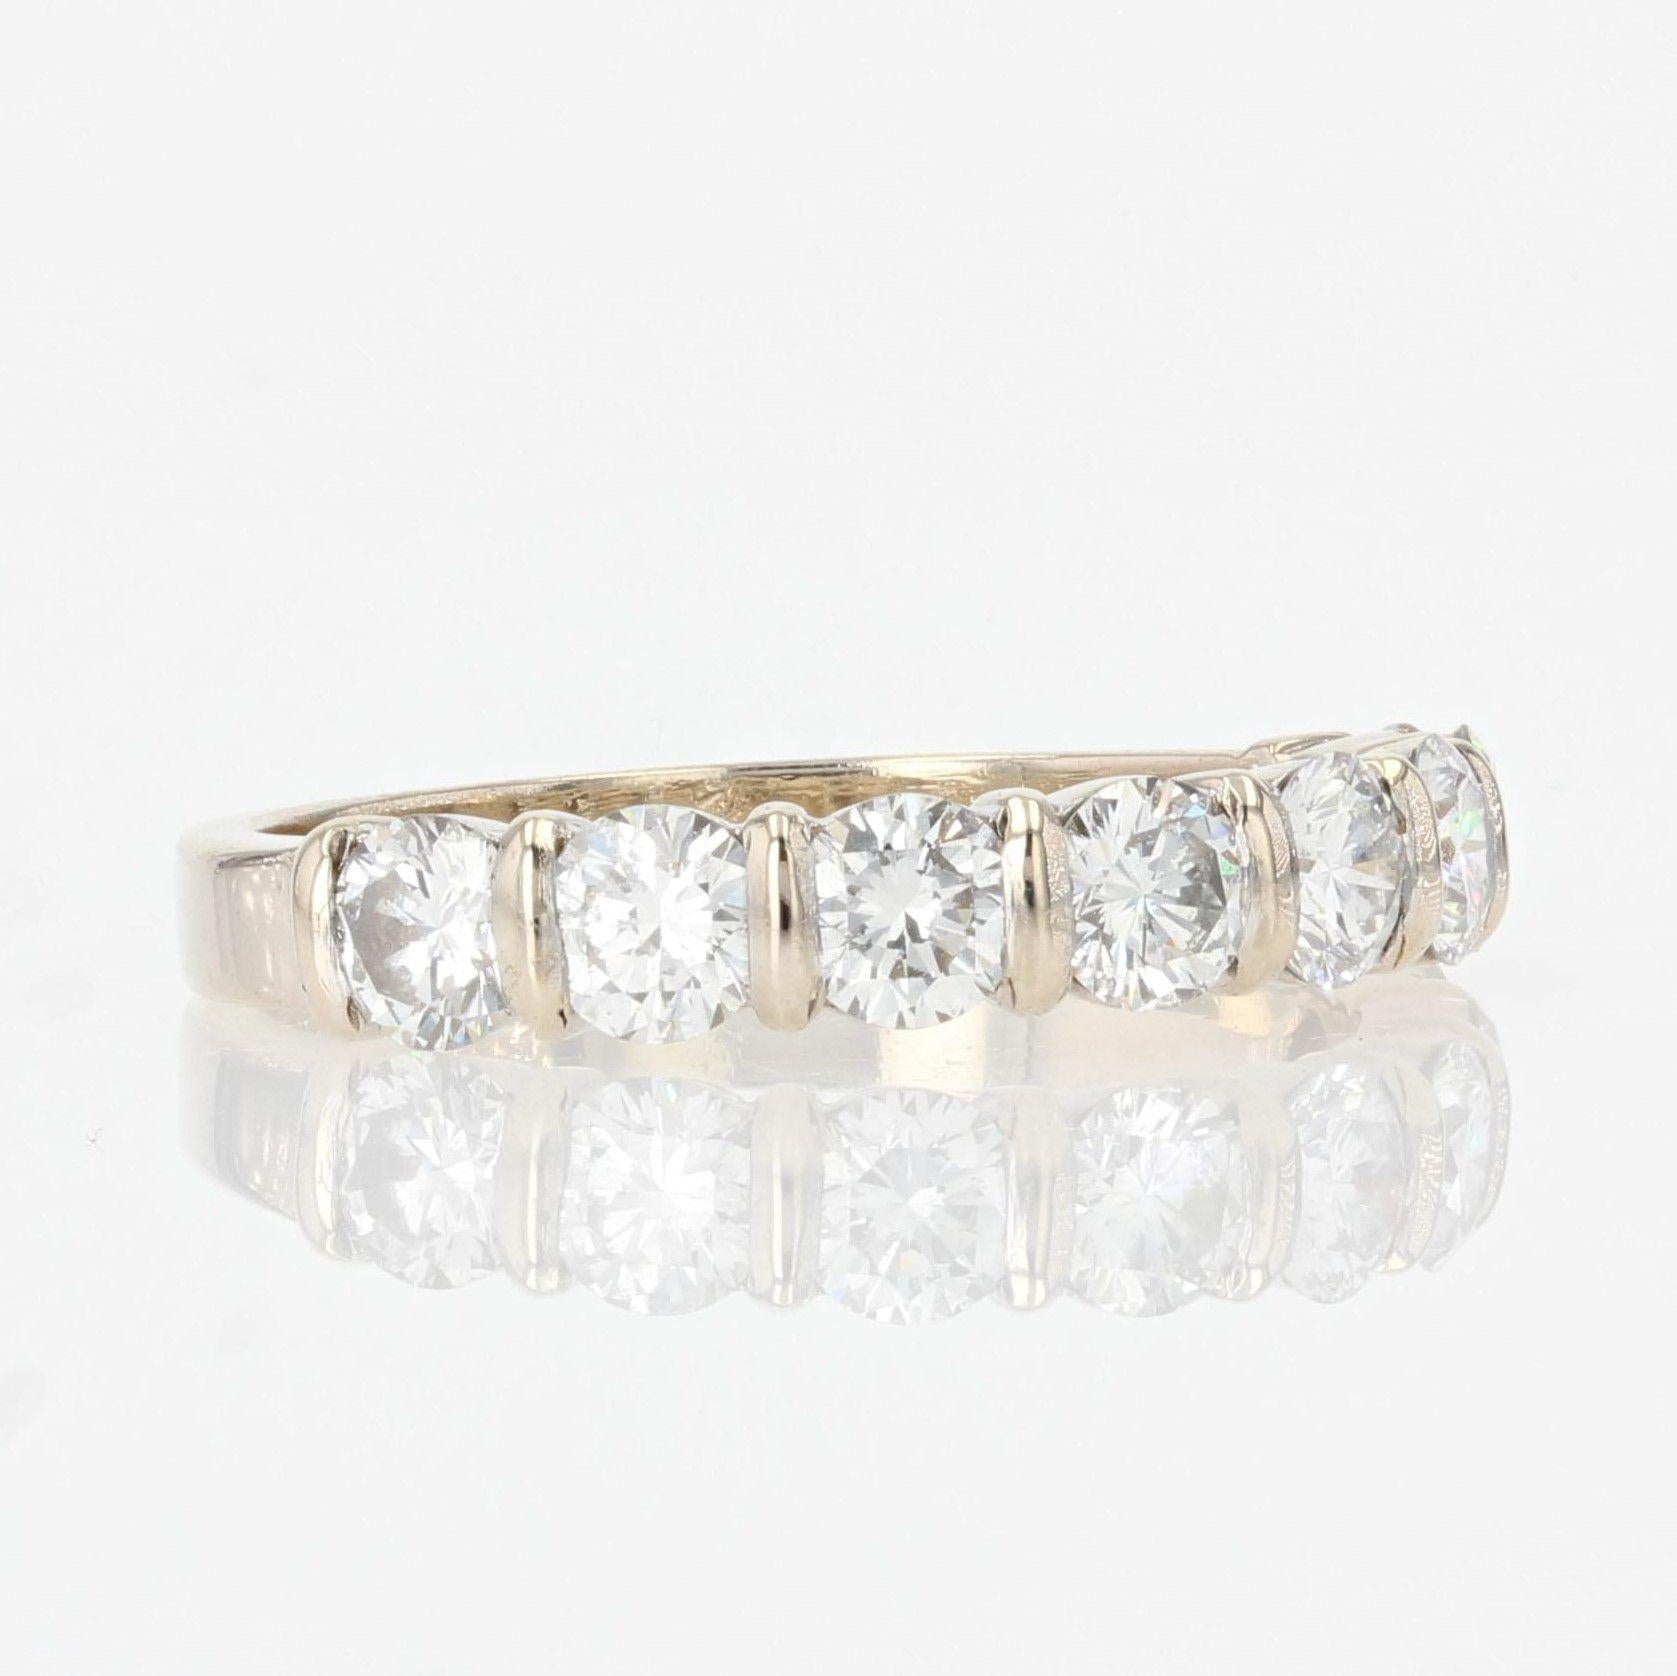 French Modern Brilliant-Cut Diamonds 18 Karat White Gold Half Wedding Ring For Sale 2